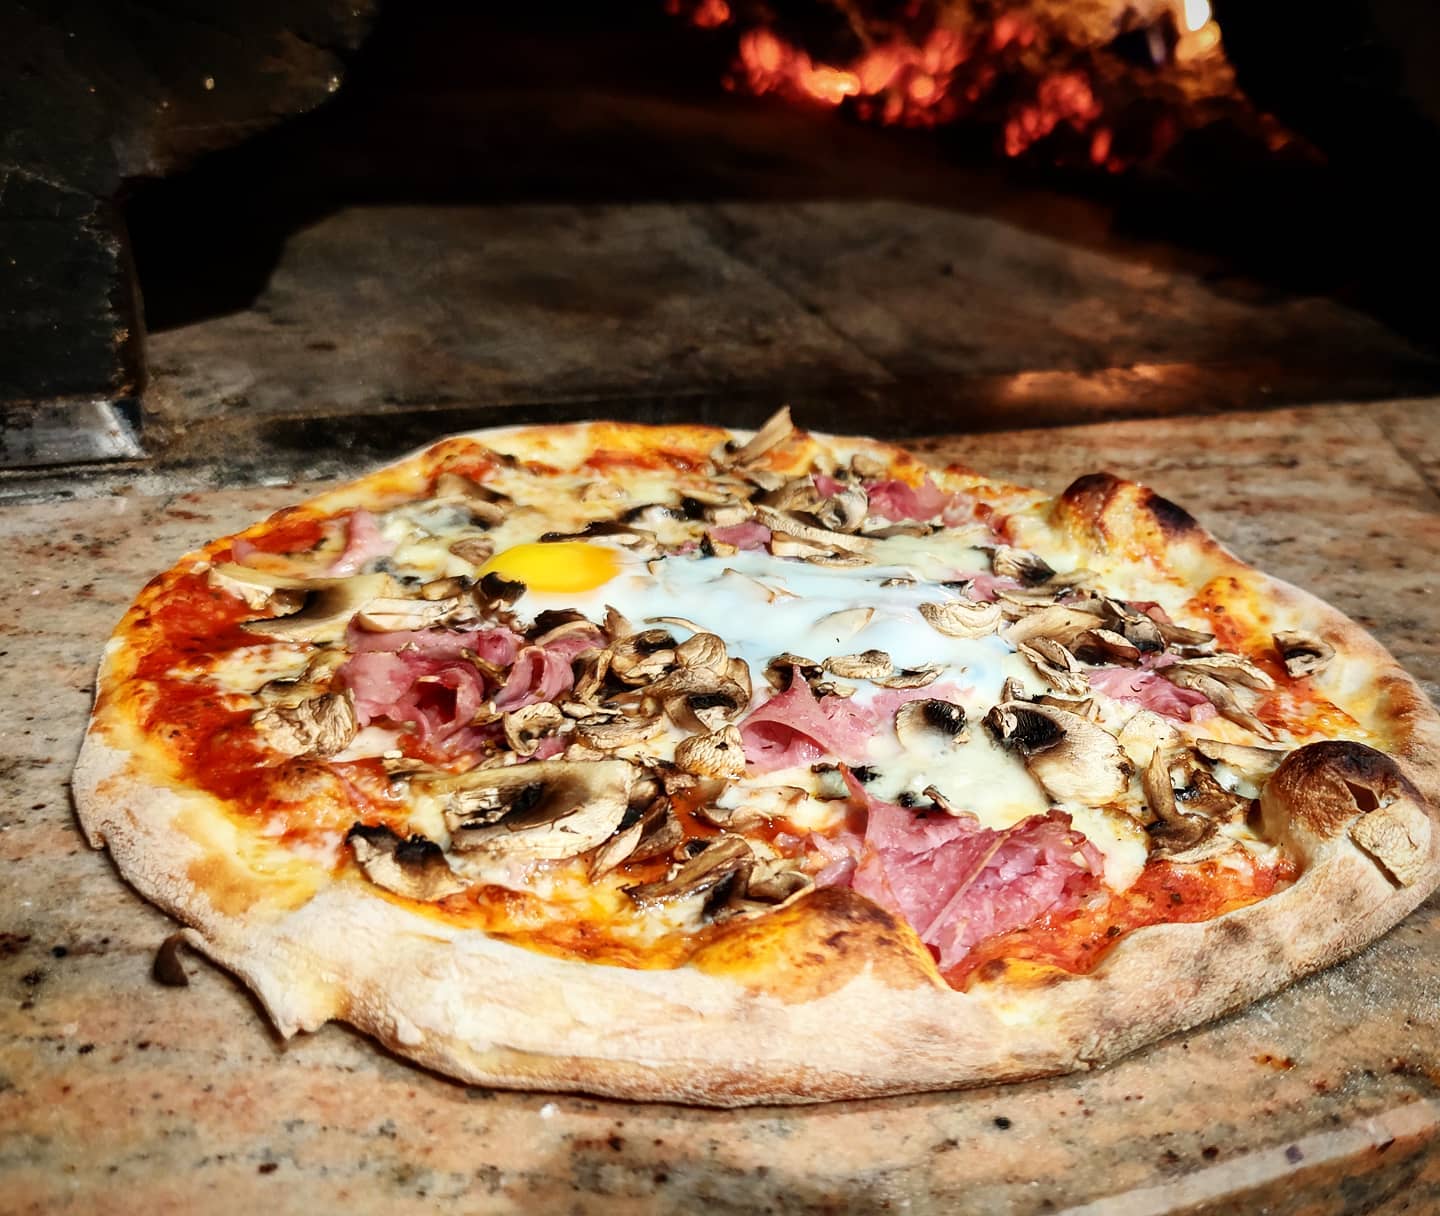 Pizza Taormina available to rent / verhuur / location at 50.8 Studio • -, Belgïe, Belgique, Belgium, Catering, Huur, Location, Louer, Only in, Photo, Rent, Studio, Verhuur, Video